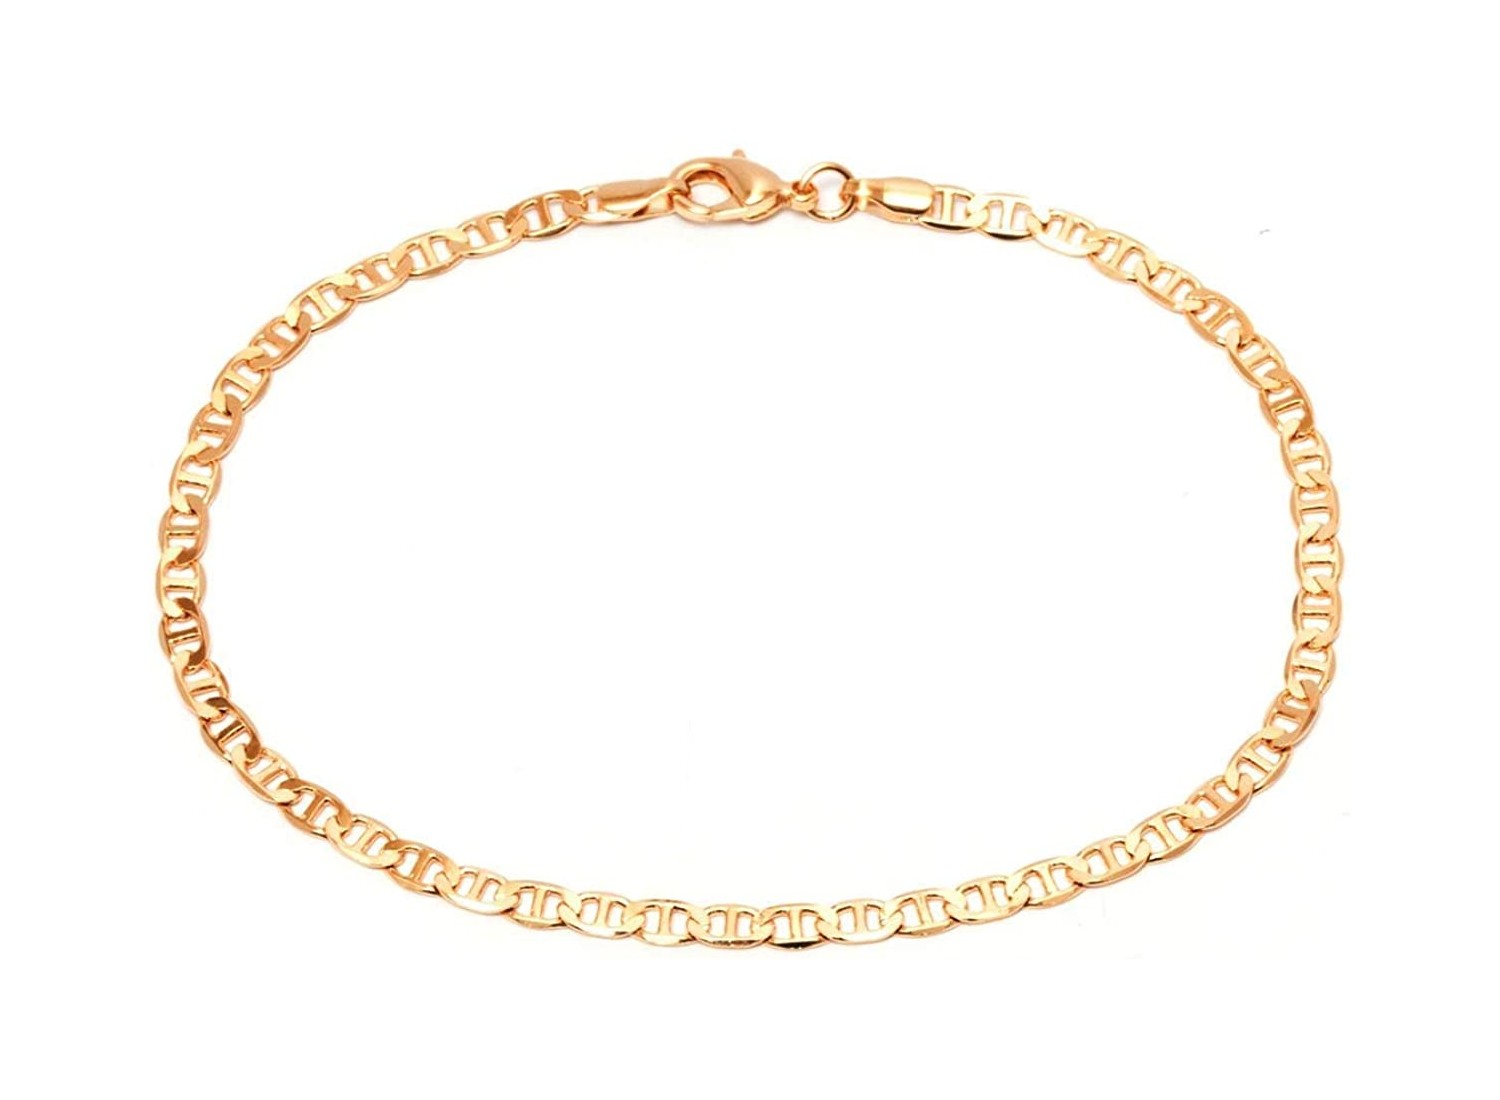 A thin, golden ankle bracelet.